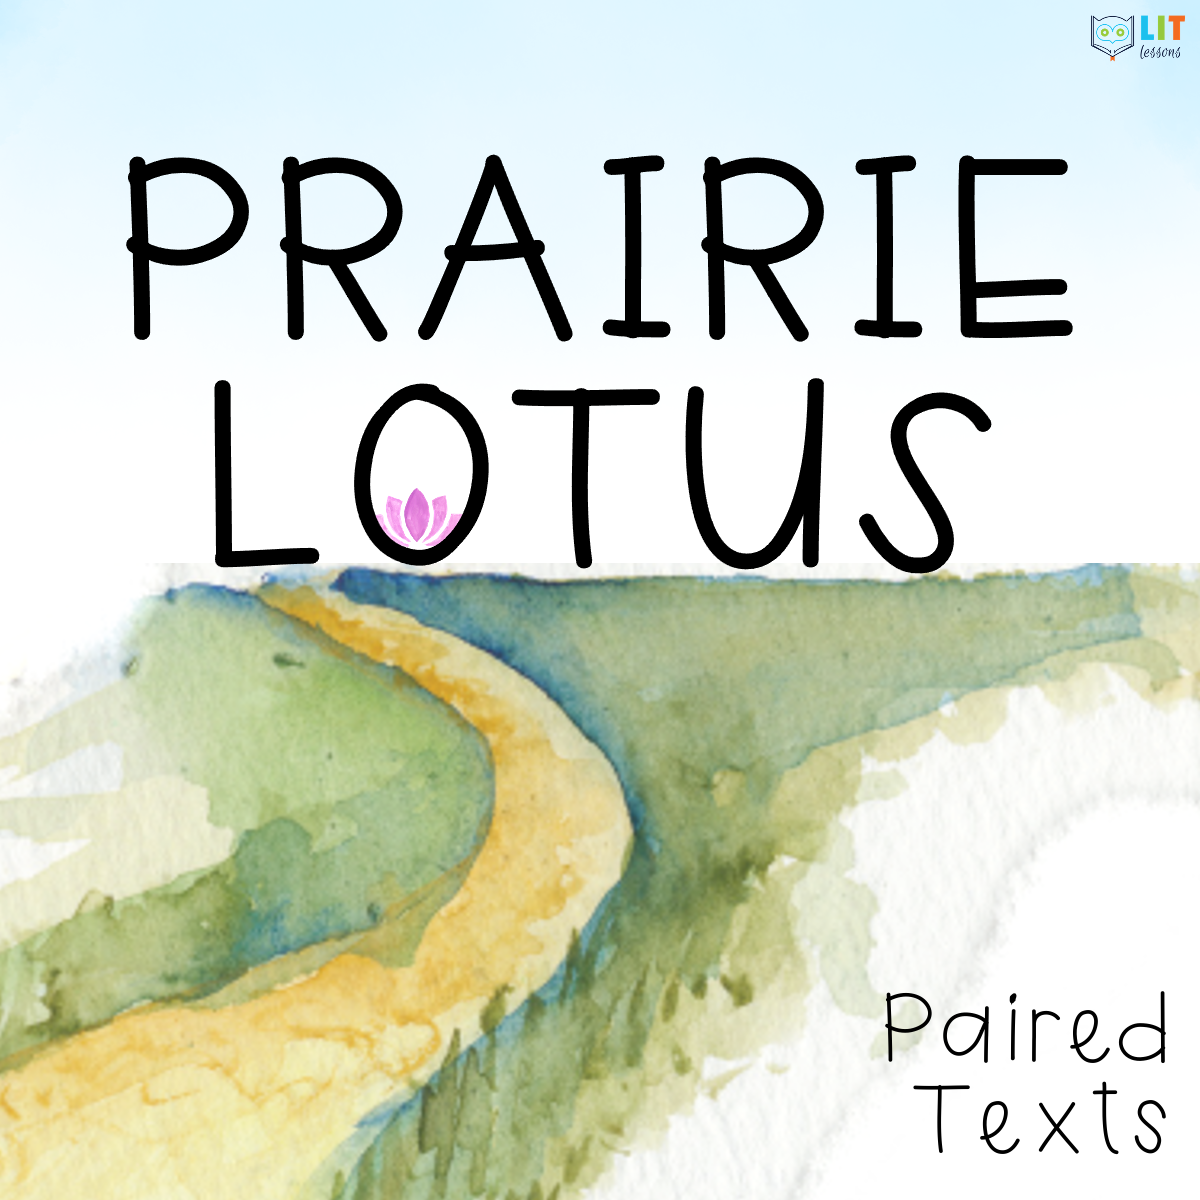 Prairie Lotus Paired Texts